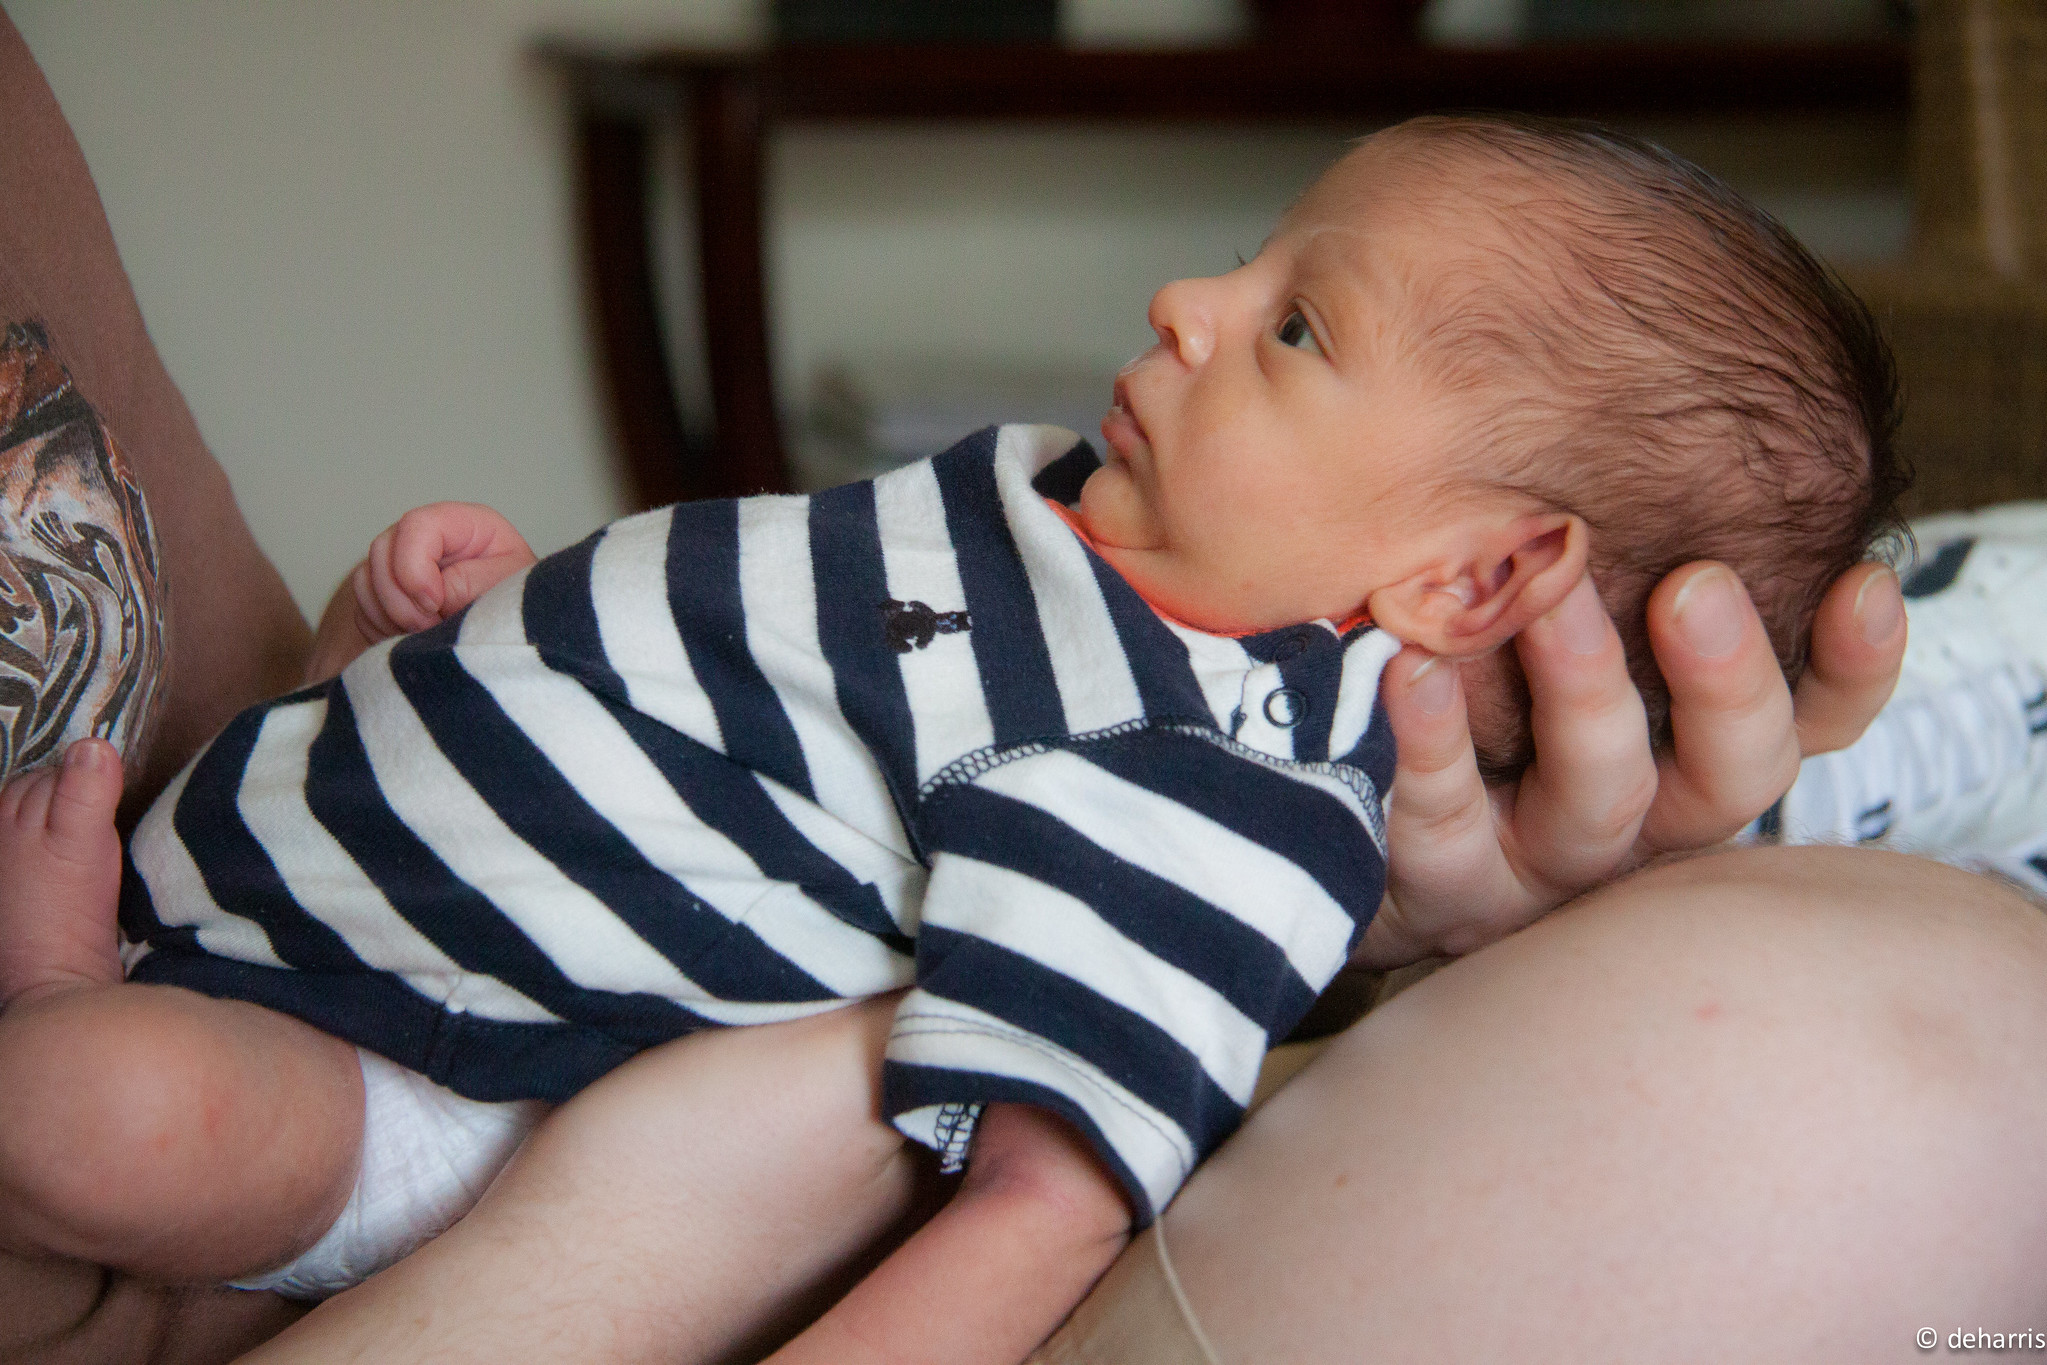 Woman holding a newborn baby | Source: Shutterstock